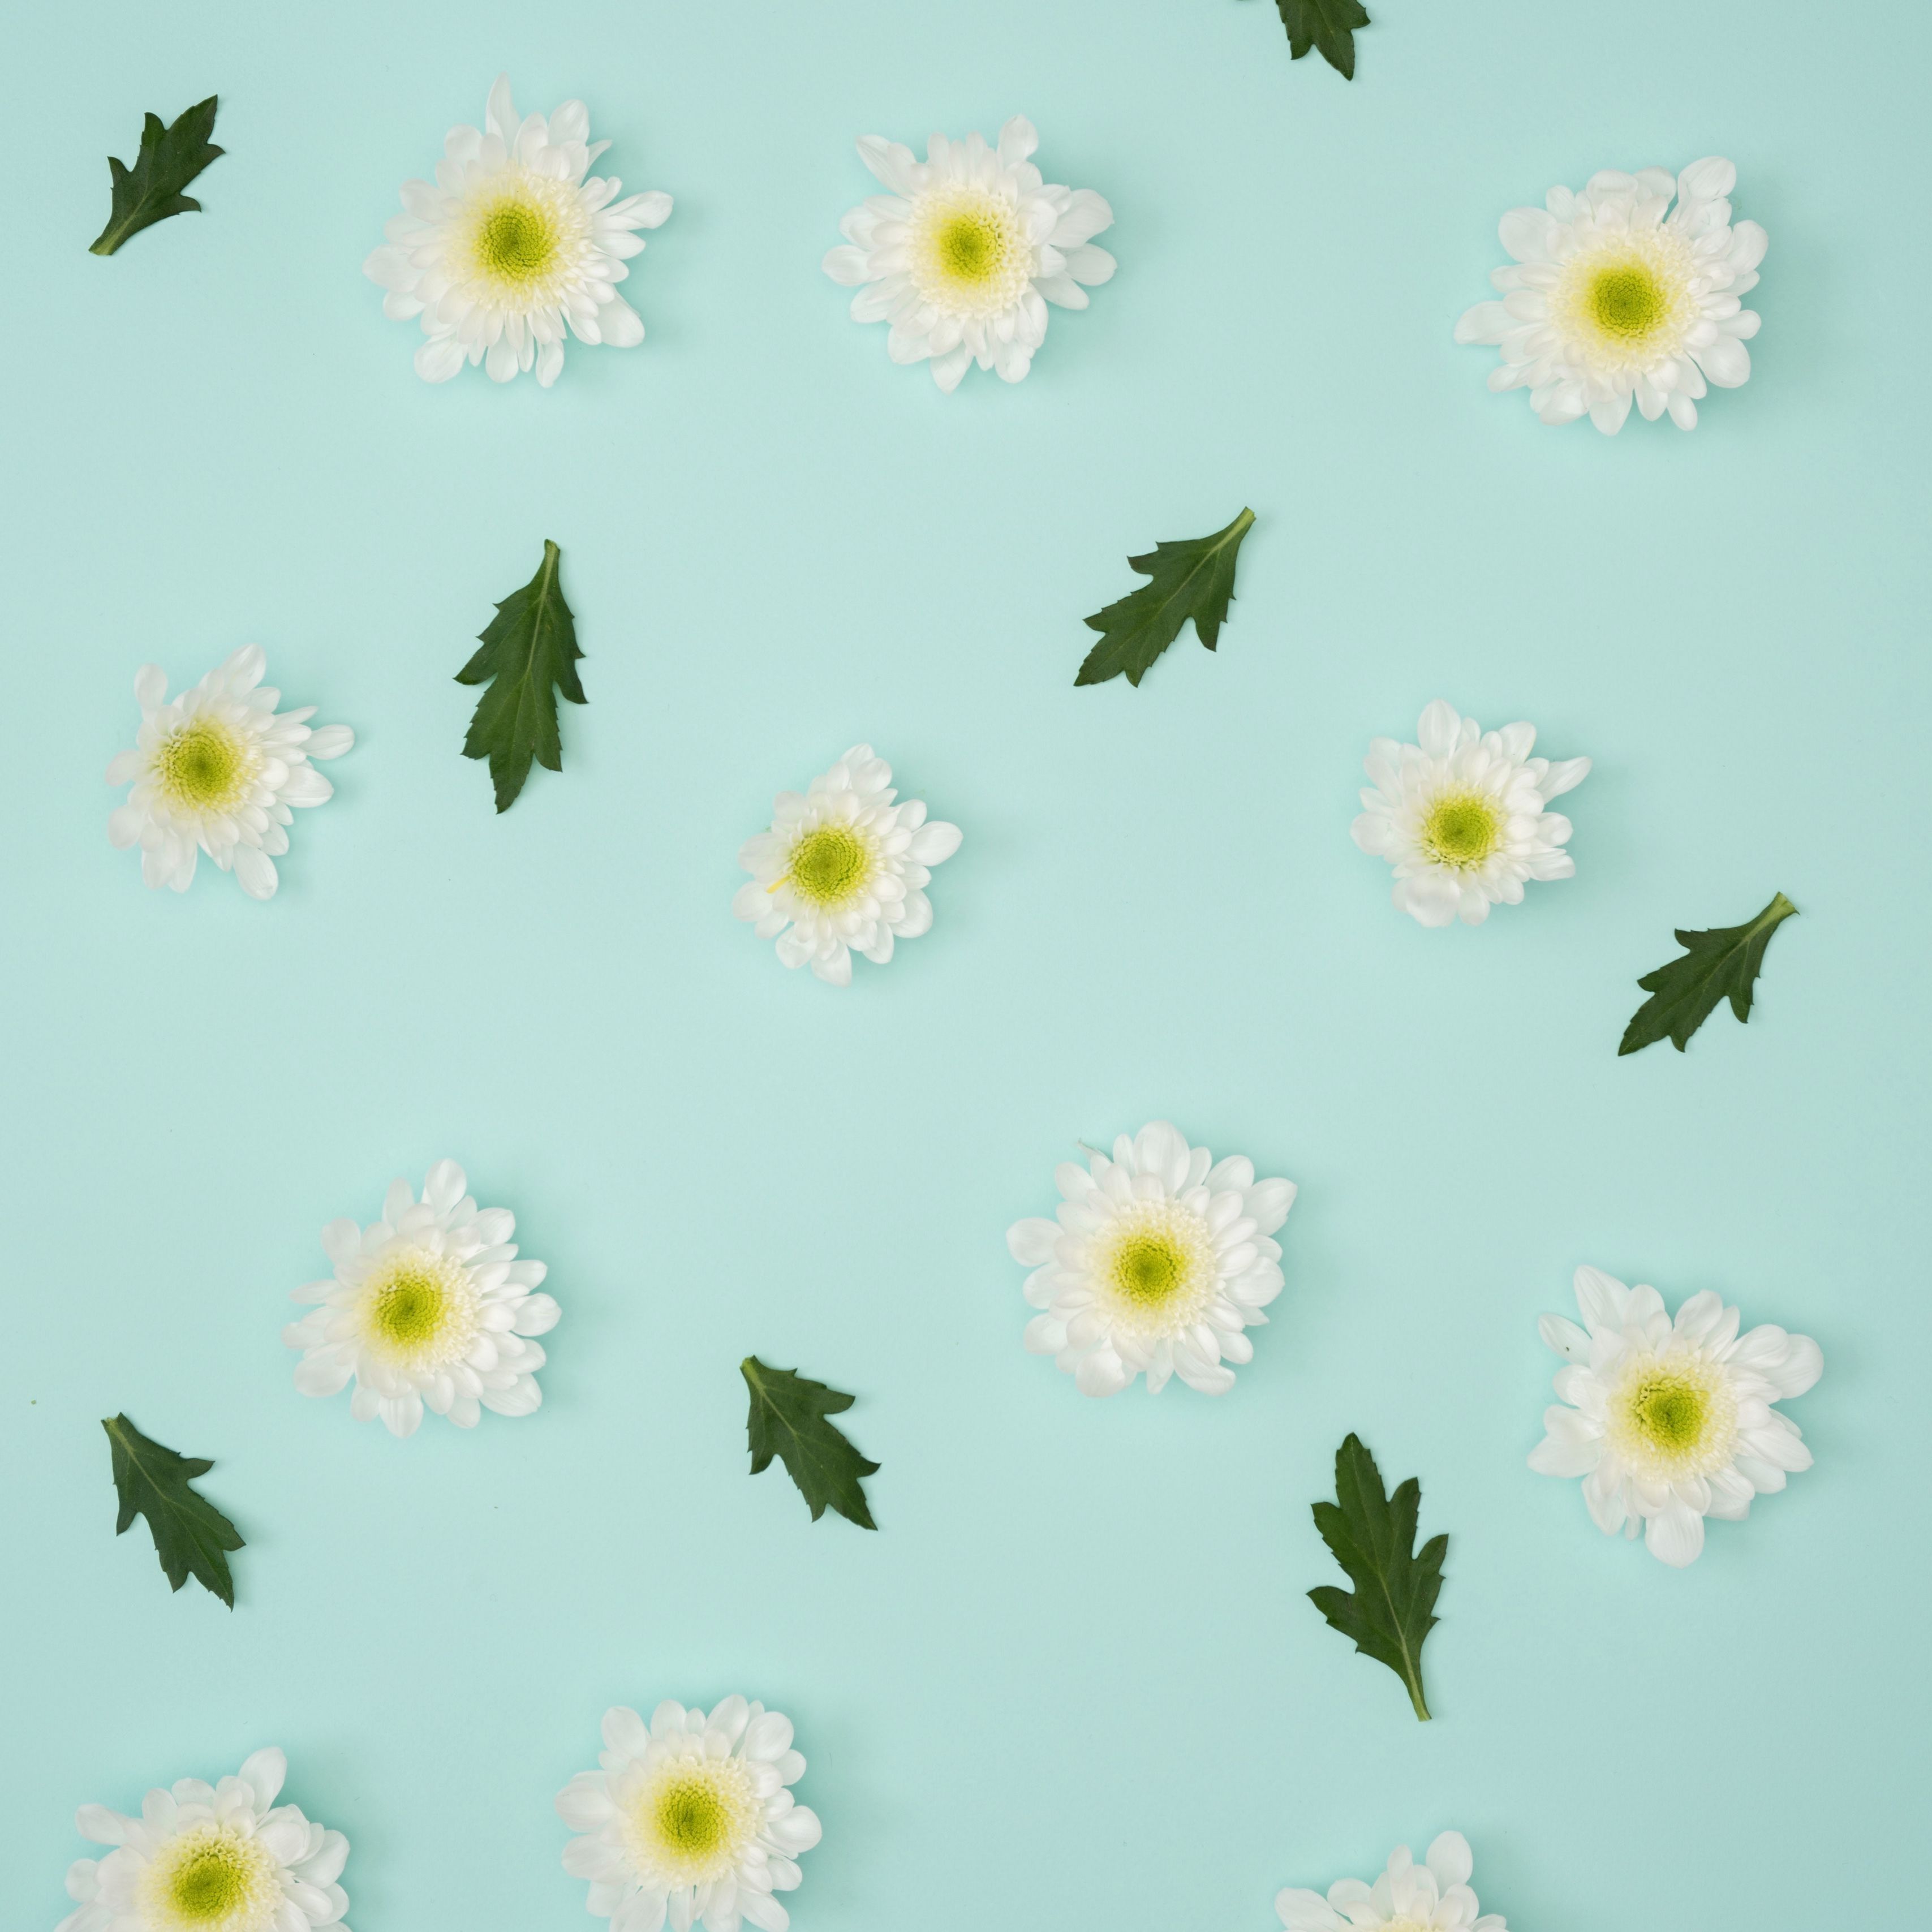 Download wallpaper 3415x3415 chamomile, leaves, minimalism, pastel ipad pro 12.9 retina for parallax HD background